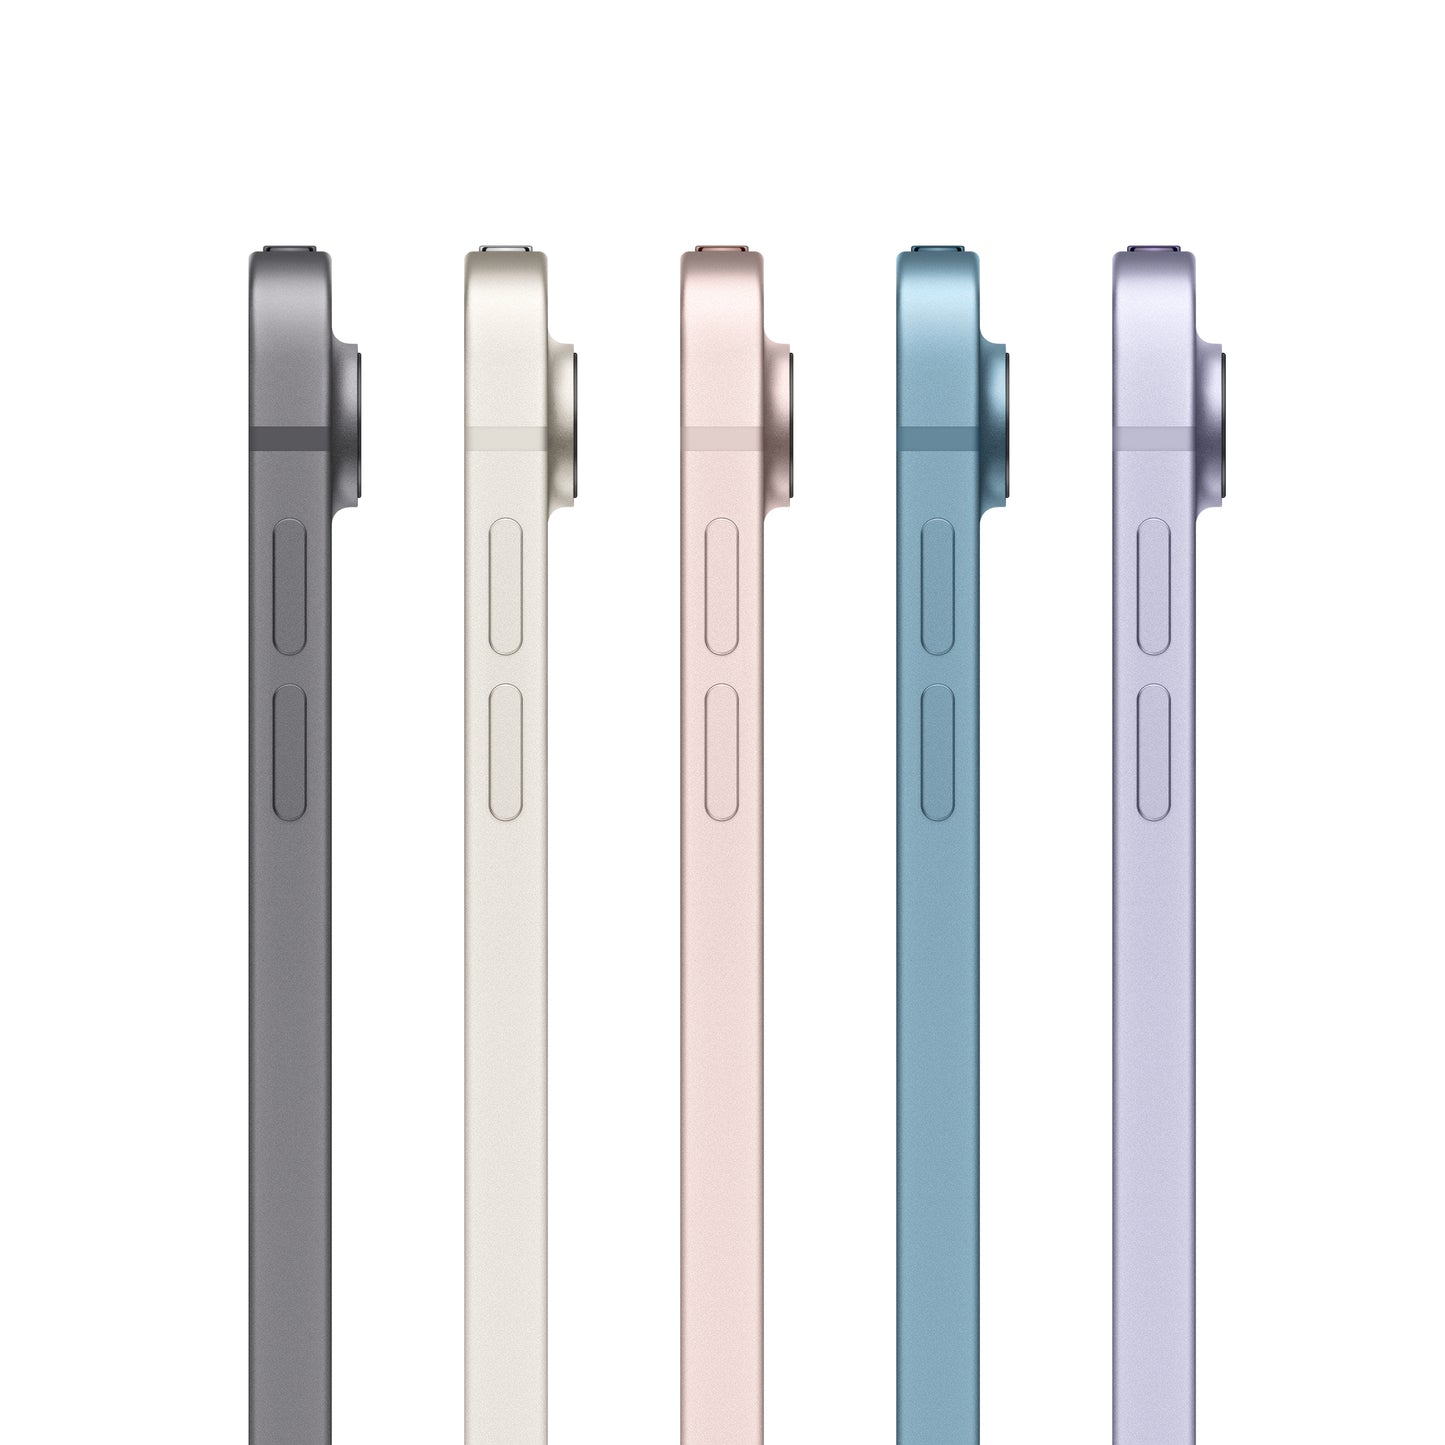 Apple iPad Air | M1 | Starlight